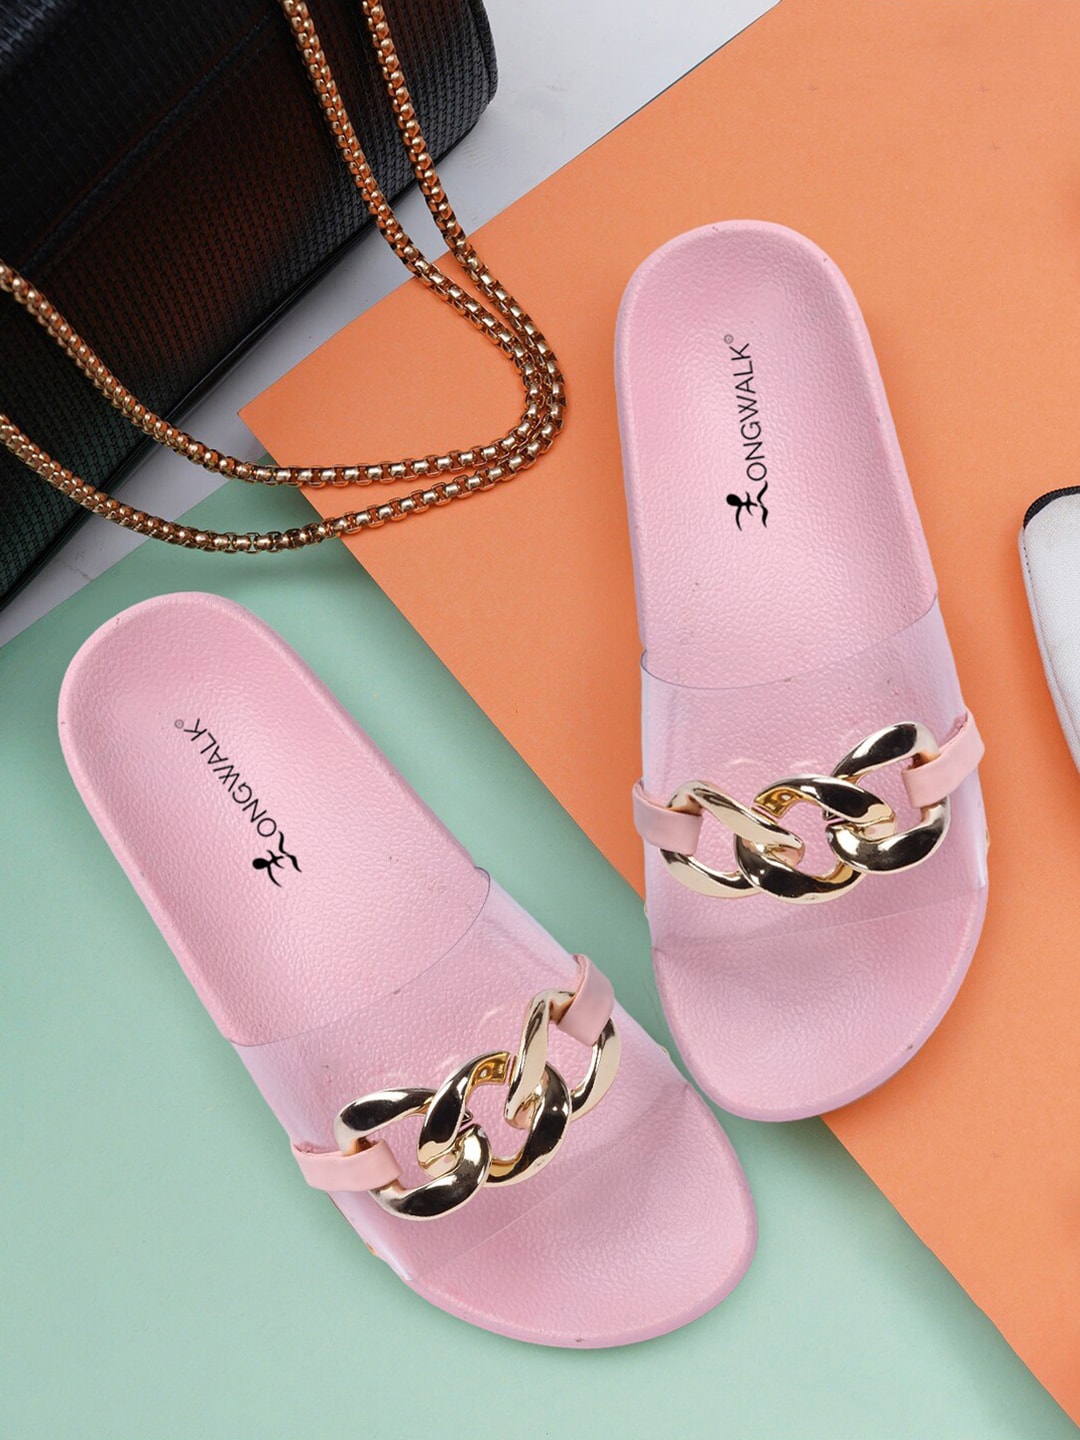 Longwalk Pink & Gold-Toned Embellished Flatform Sandals Price in India